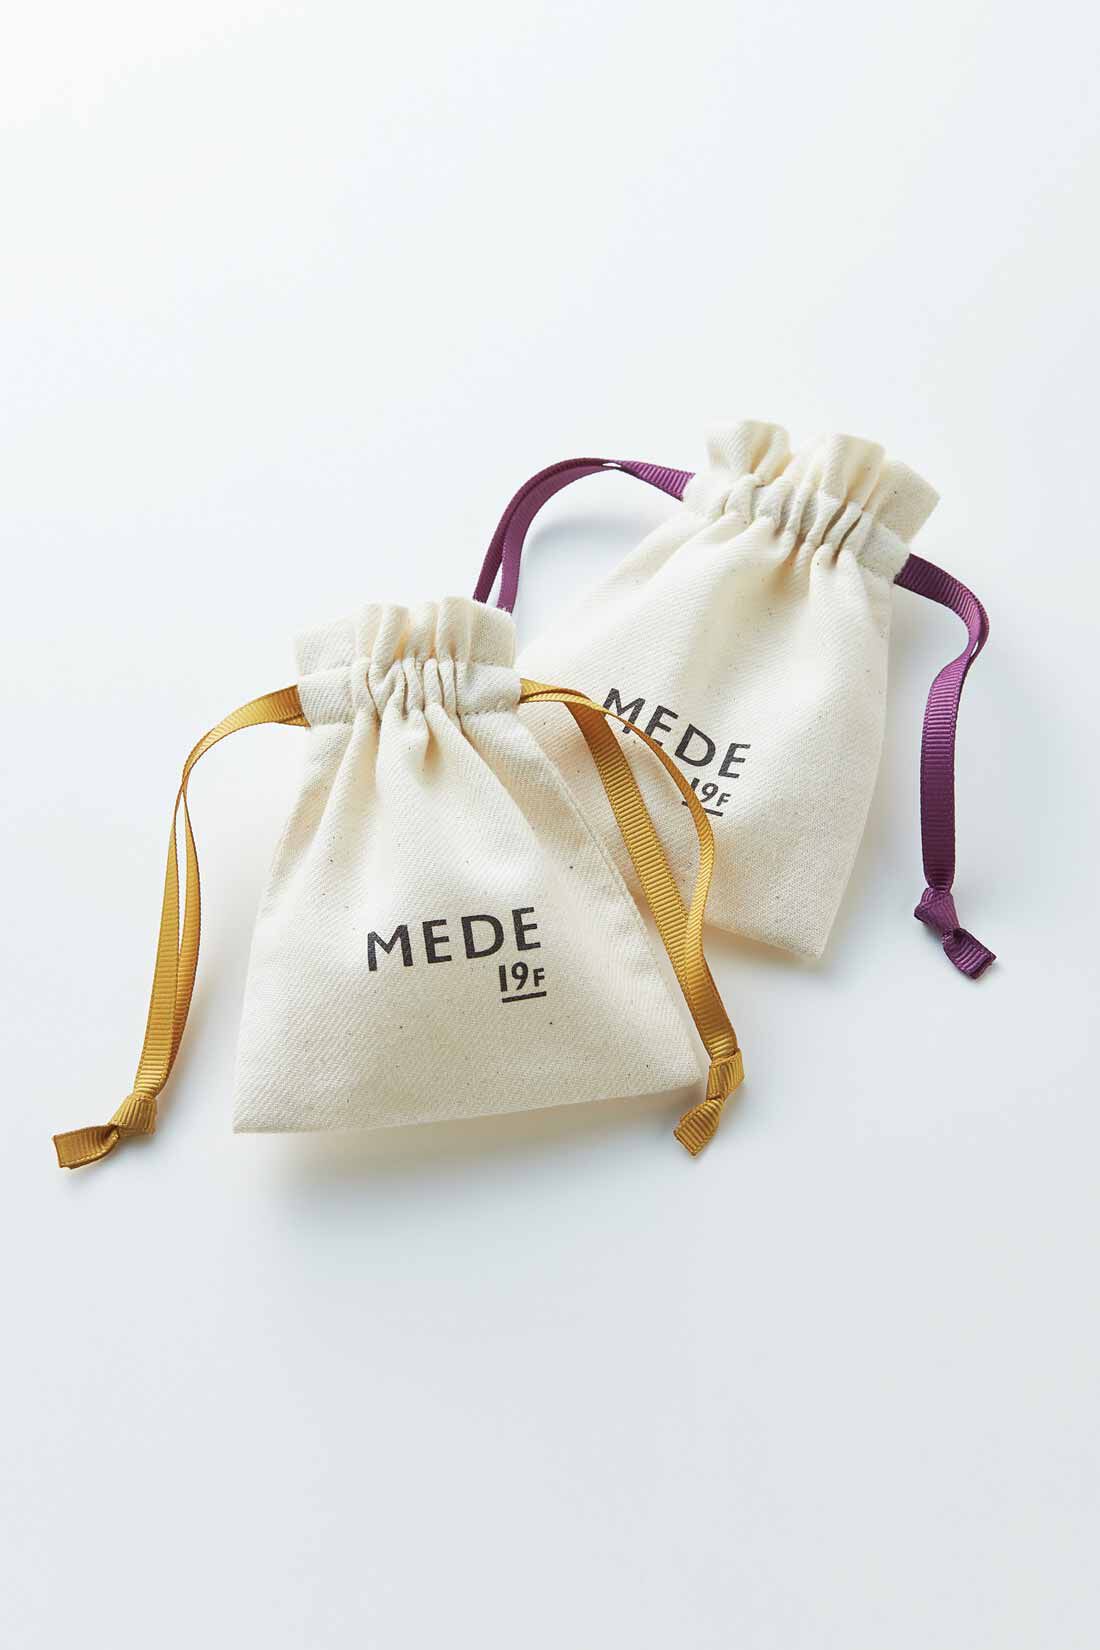 MEDE19F|YPAC for MEDE19F　フランス製陶器ボタンイヤリング type.11|MEDE19Fオリジナルきんちゃくに入れてお届けします。